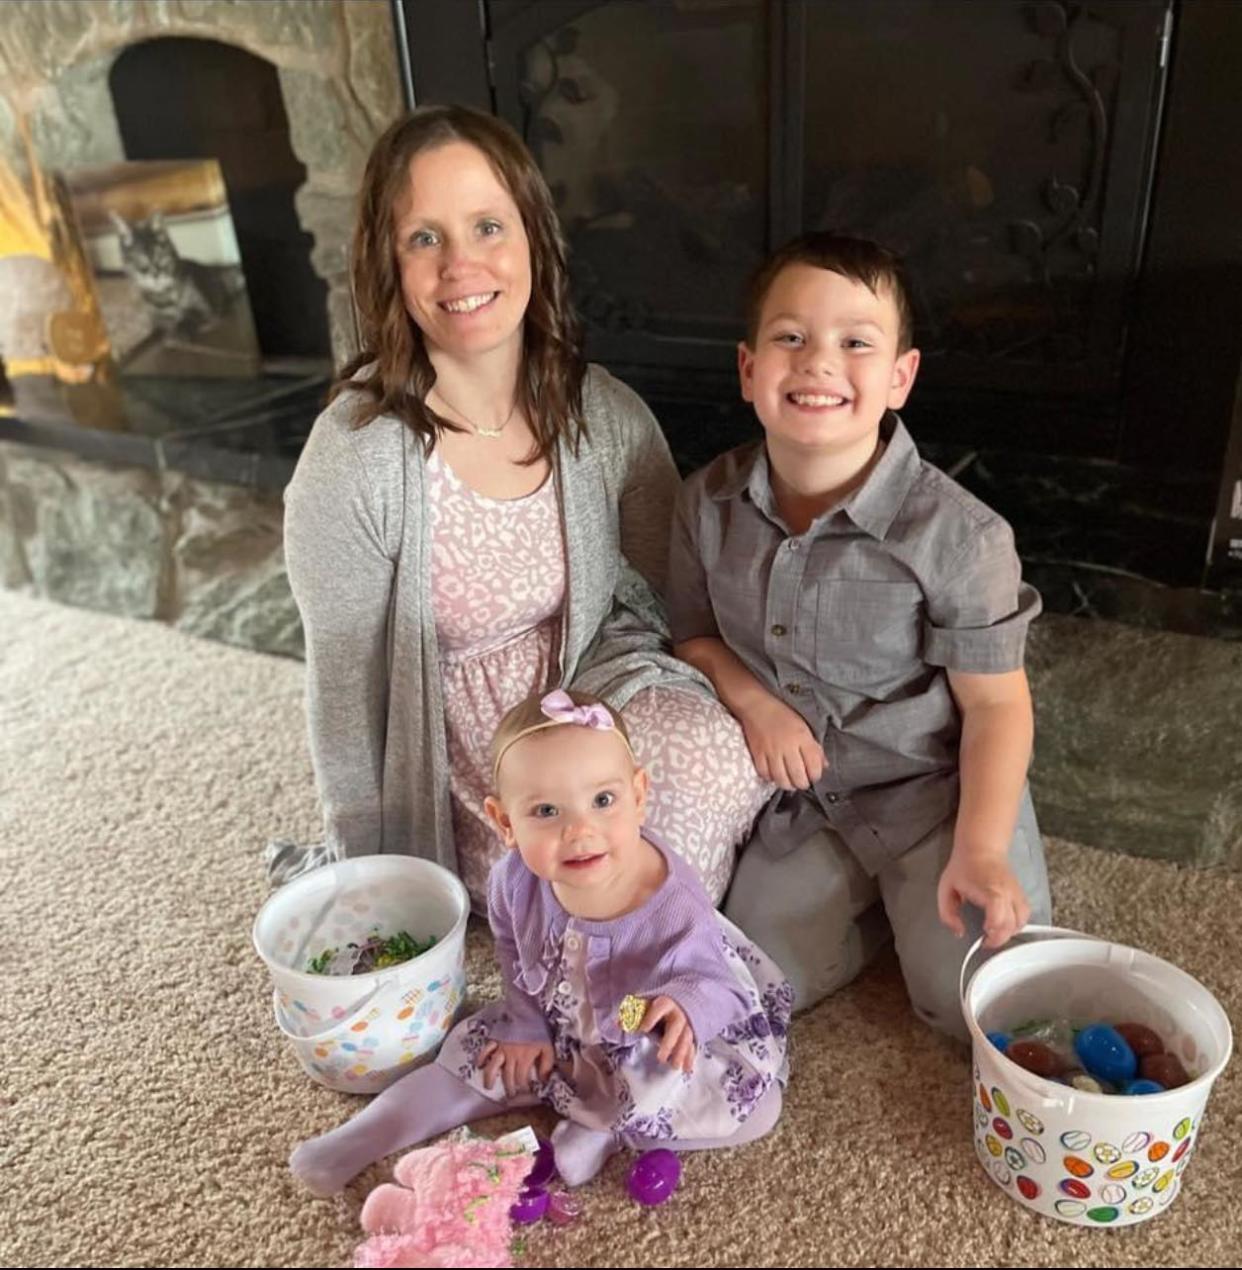 Allison Rader and her children, Amelia Gordon and Anthony Gordon.